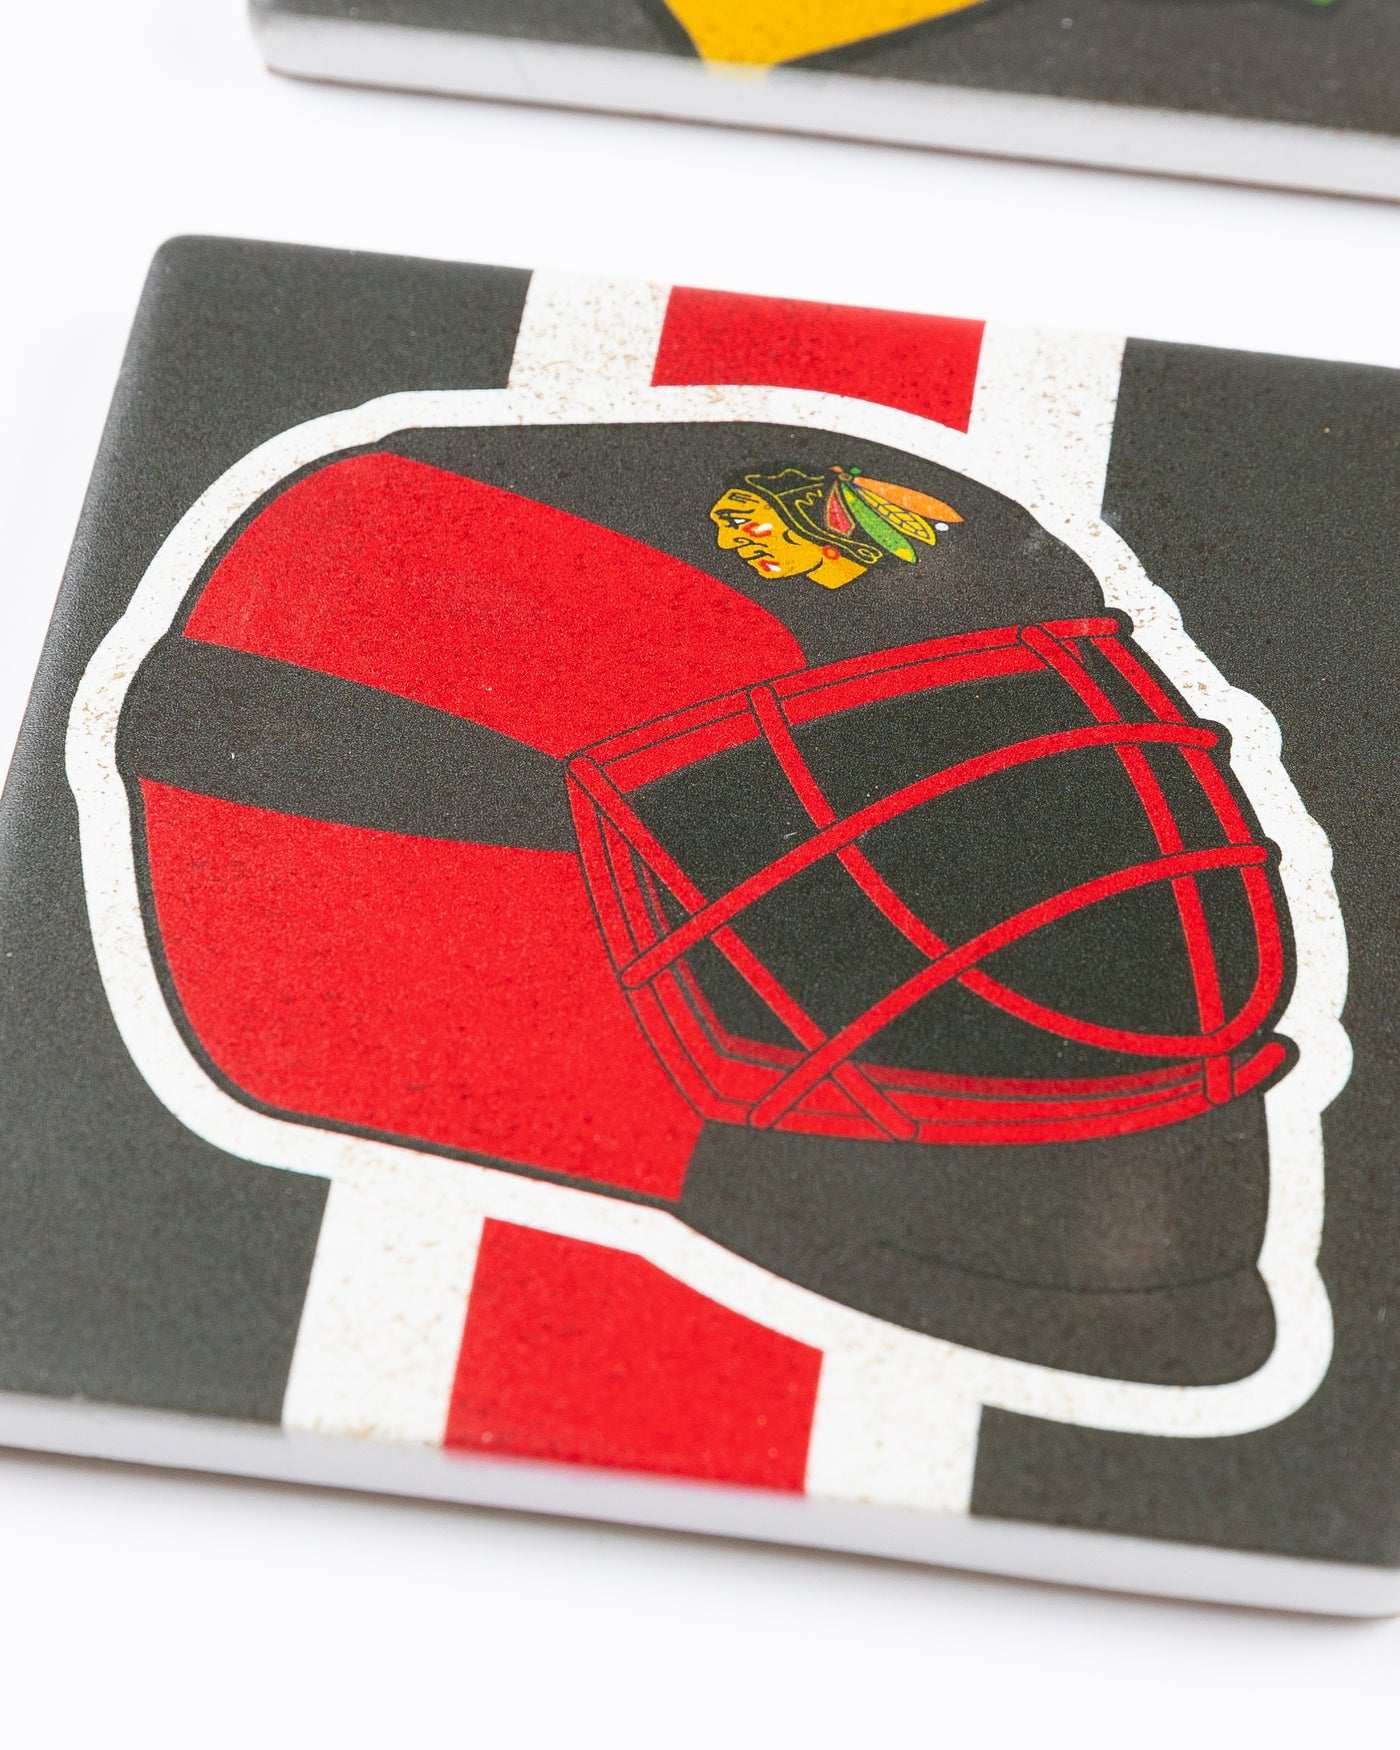 Chicago Blackhawks coaster with goalie helmet design 